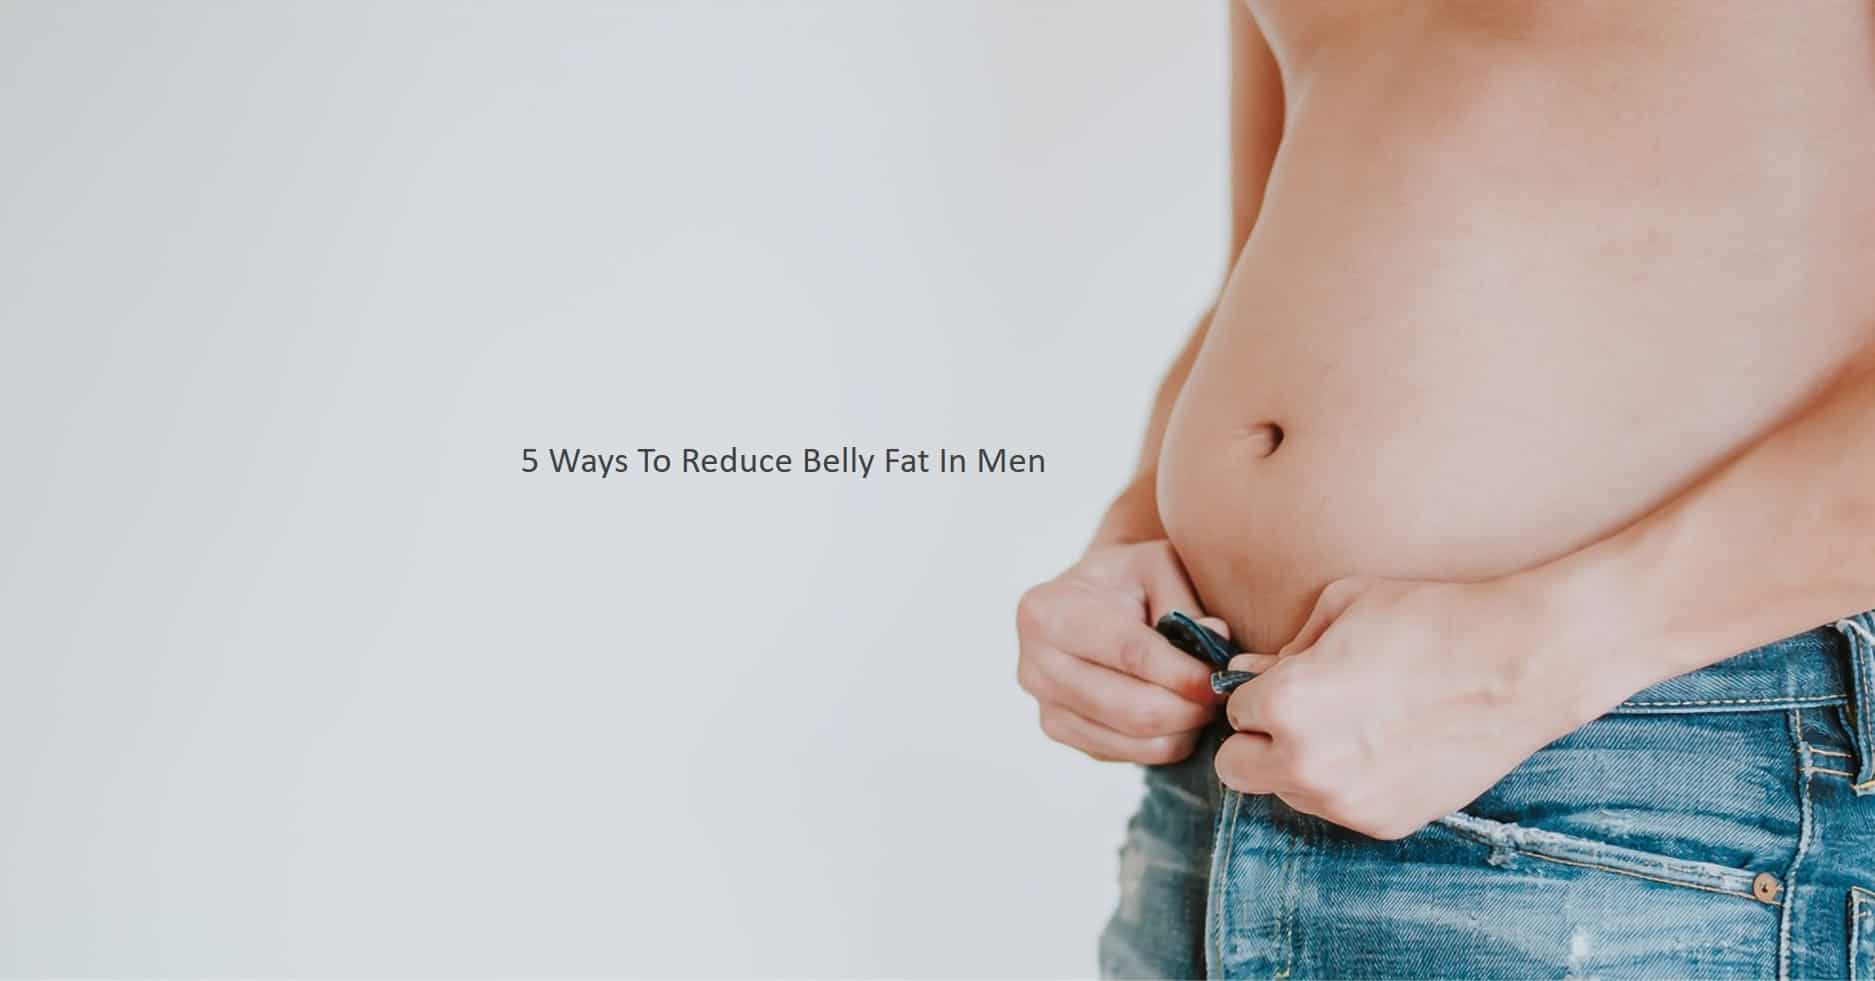 https://dreamplasticsurgery.com/wp-content/uploads/2020/11/5-Ways-To-Reduce-Belly-Fat-In-Men.jpg